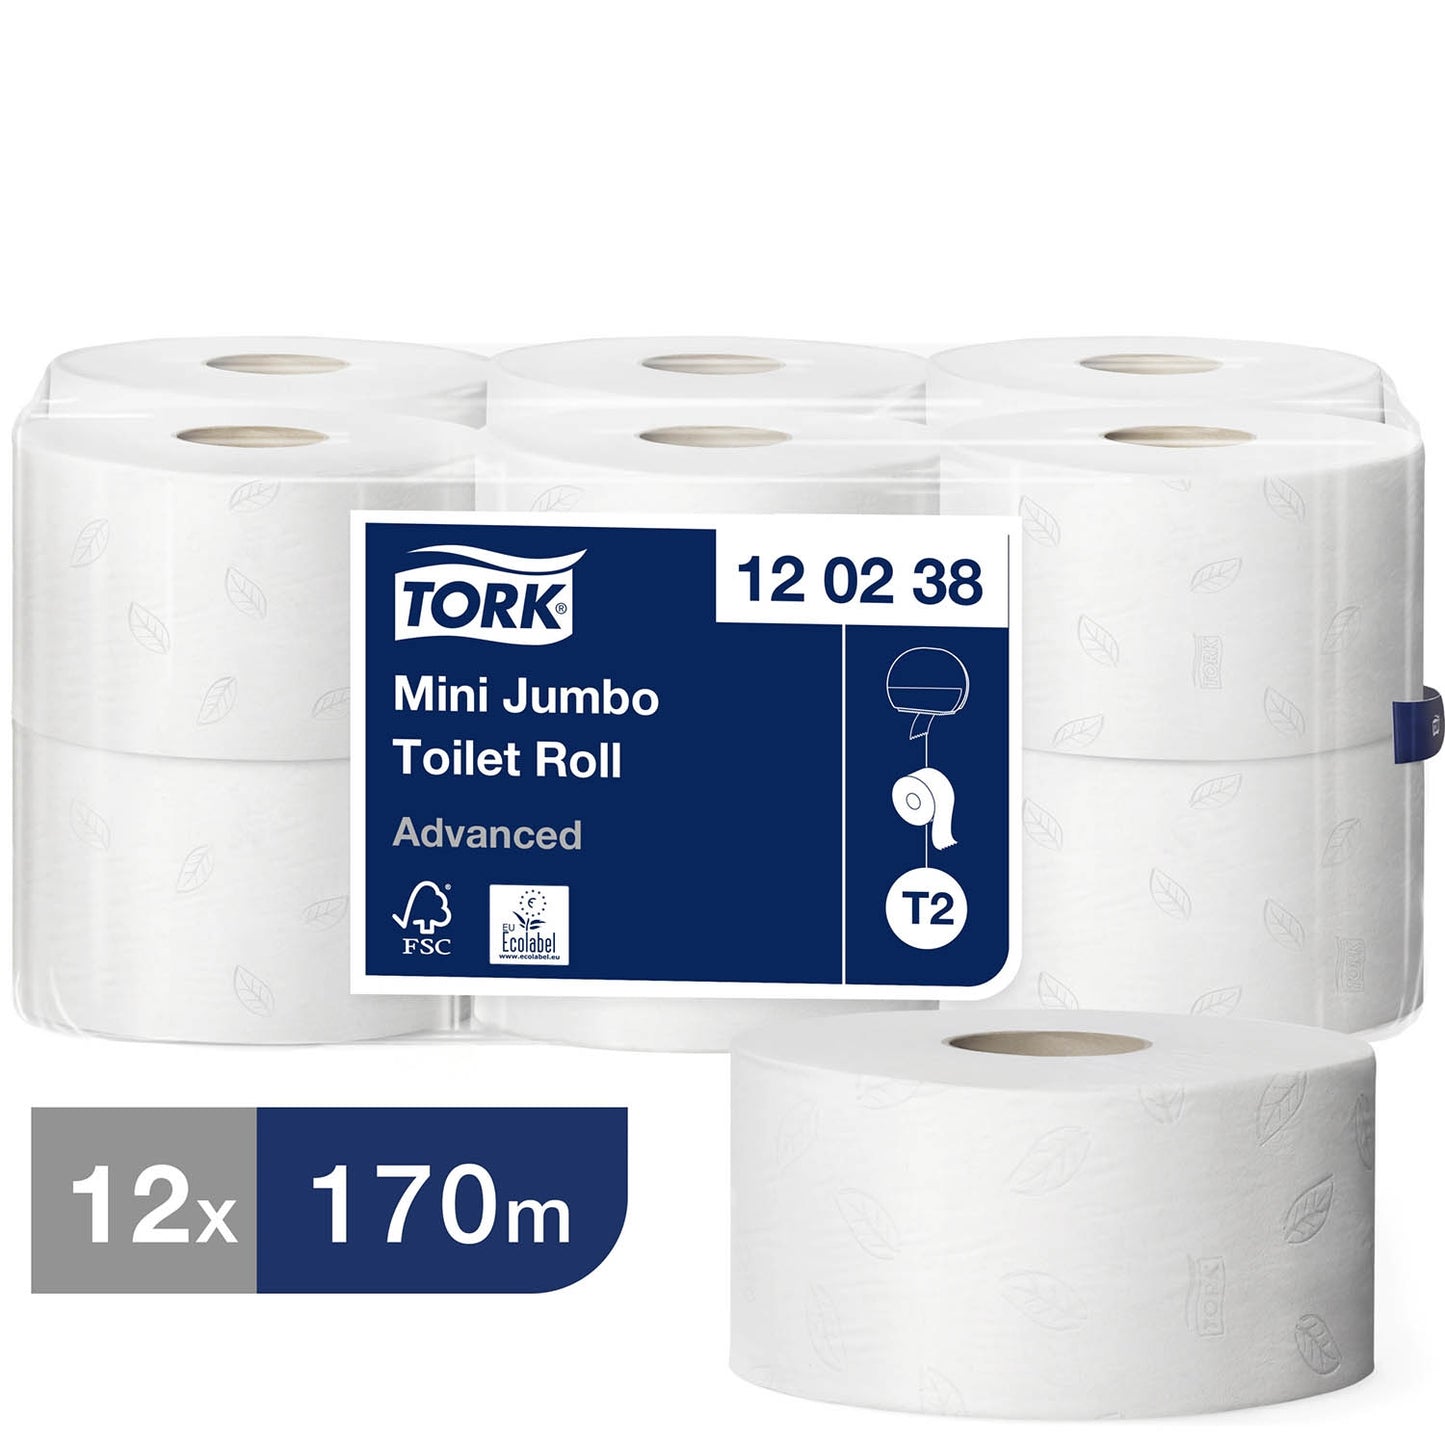 Tork Mini Jumbo Toilet Roll Advanced 2 Ply - 120238 - Case of 12 Rolls - 170m